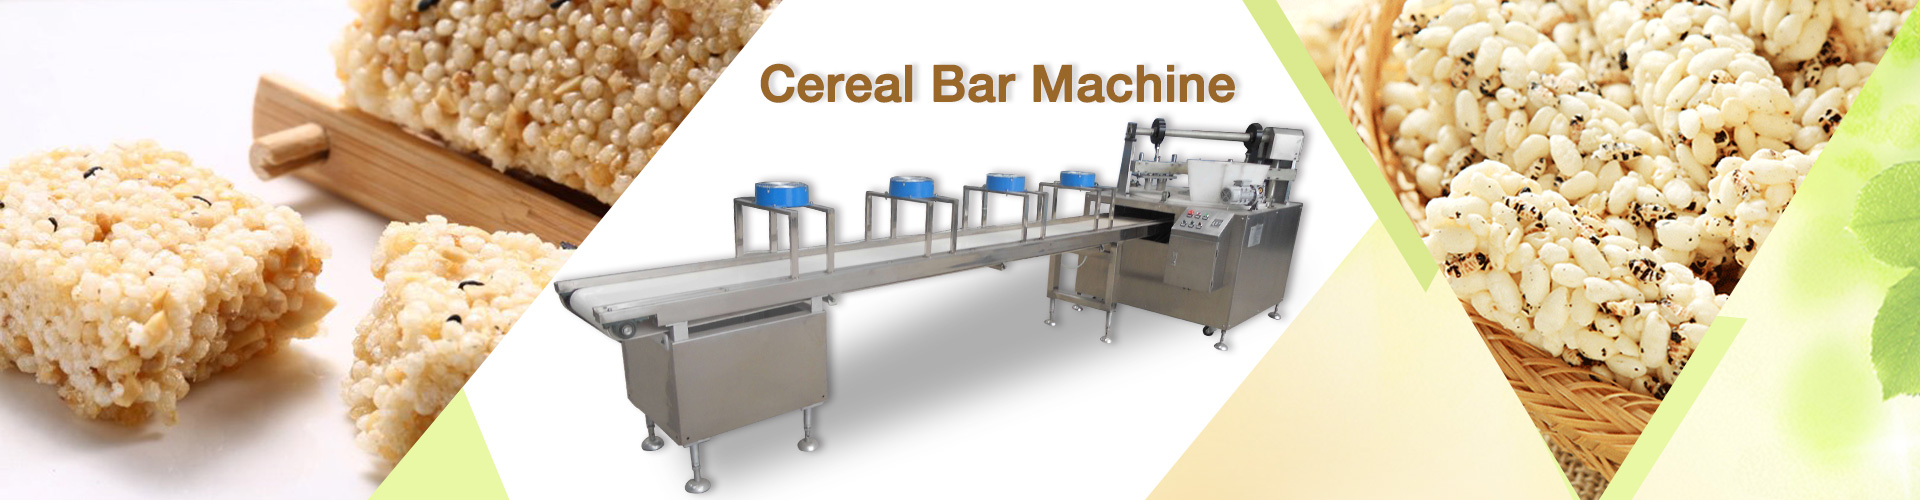 cereal bar machine